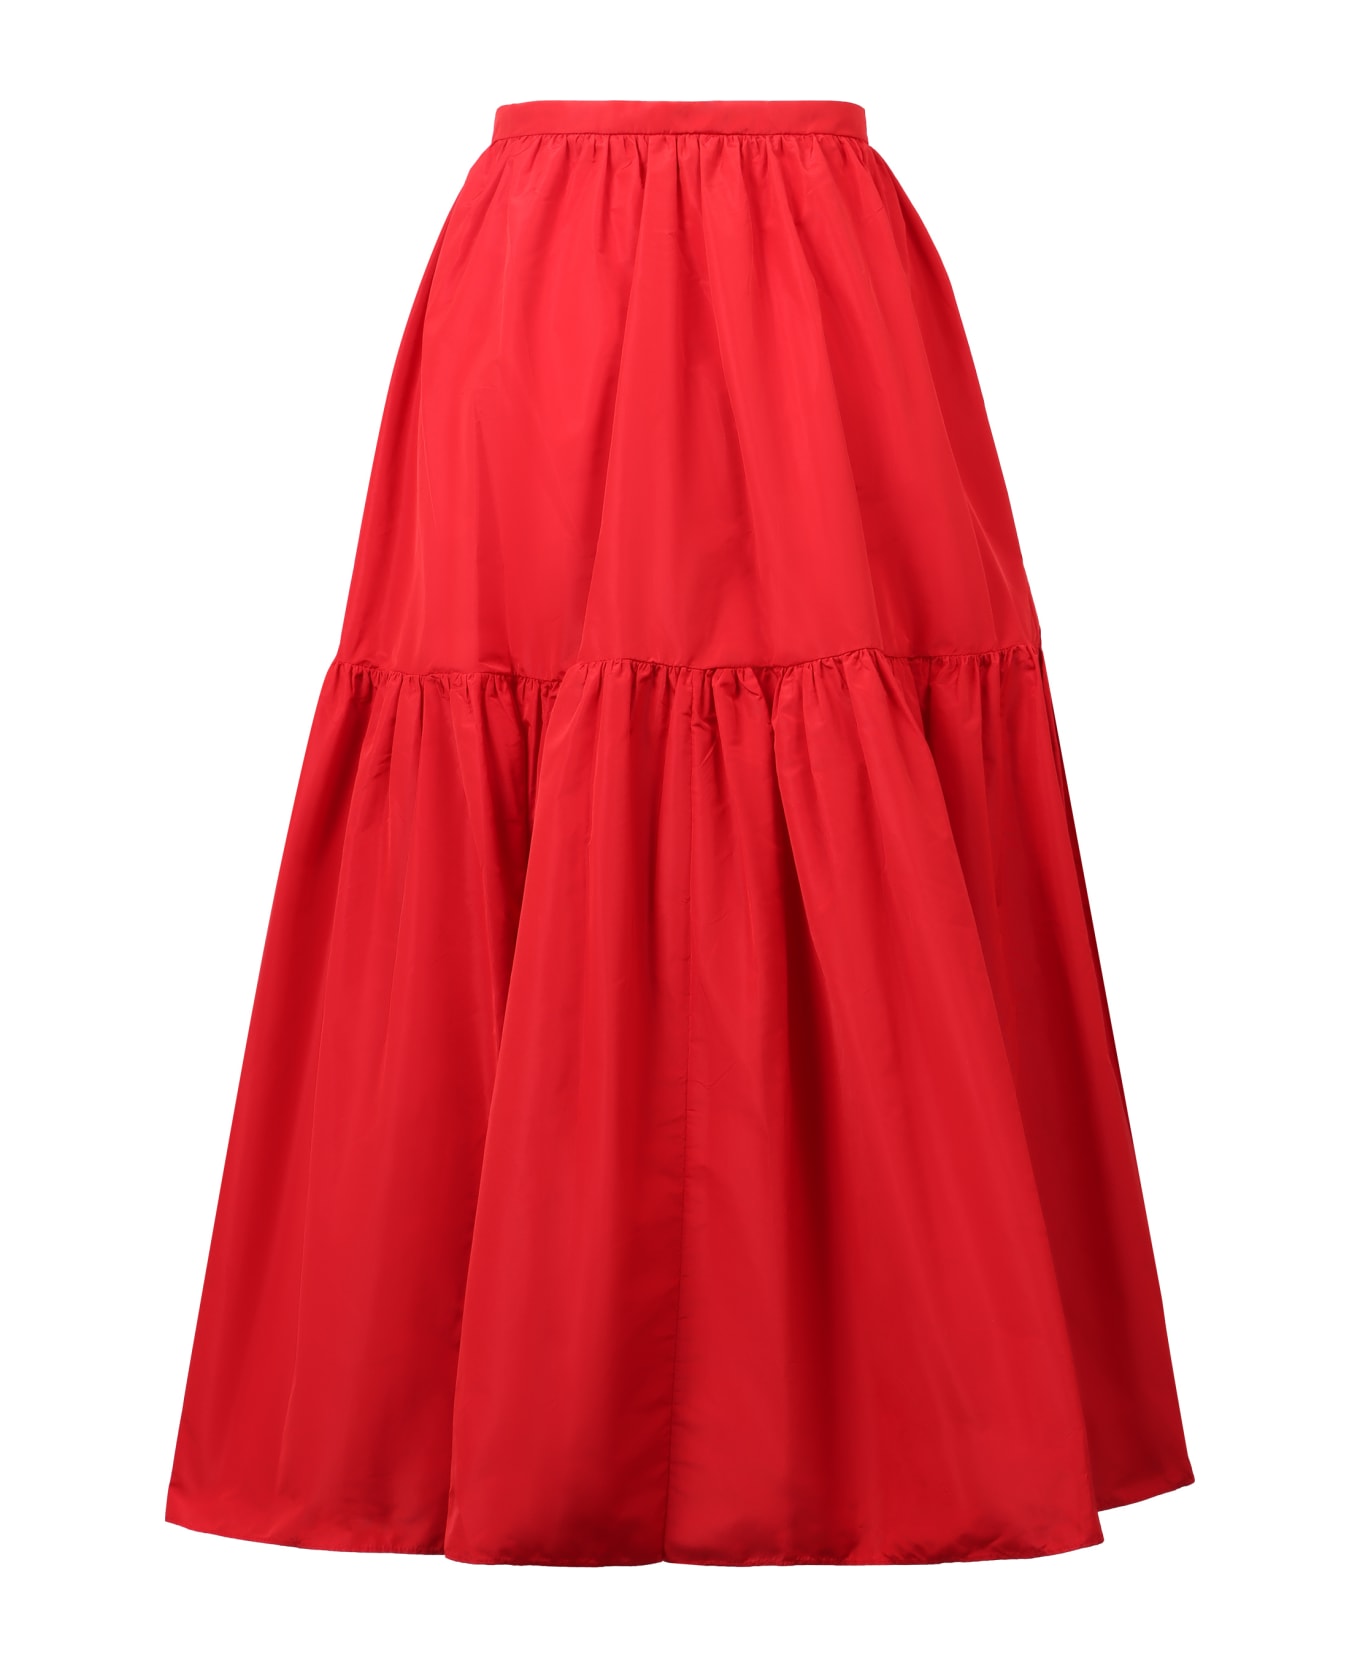 Patou Ruffled Skirt - red